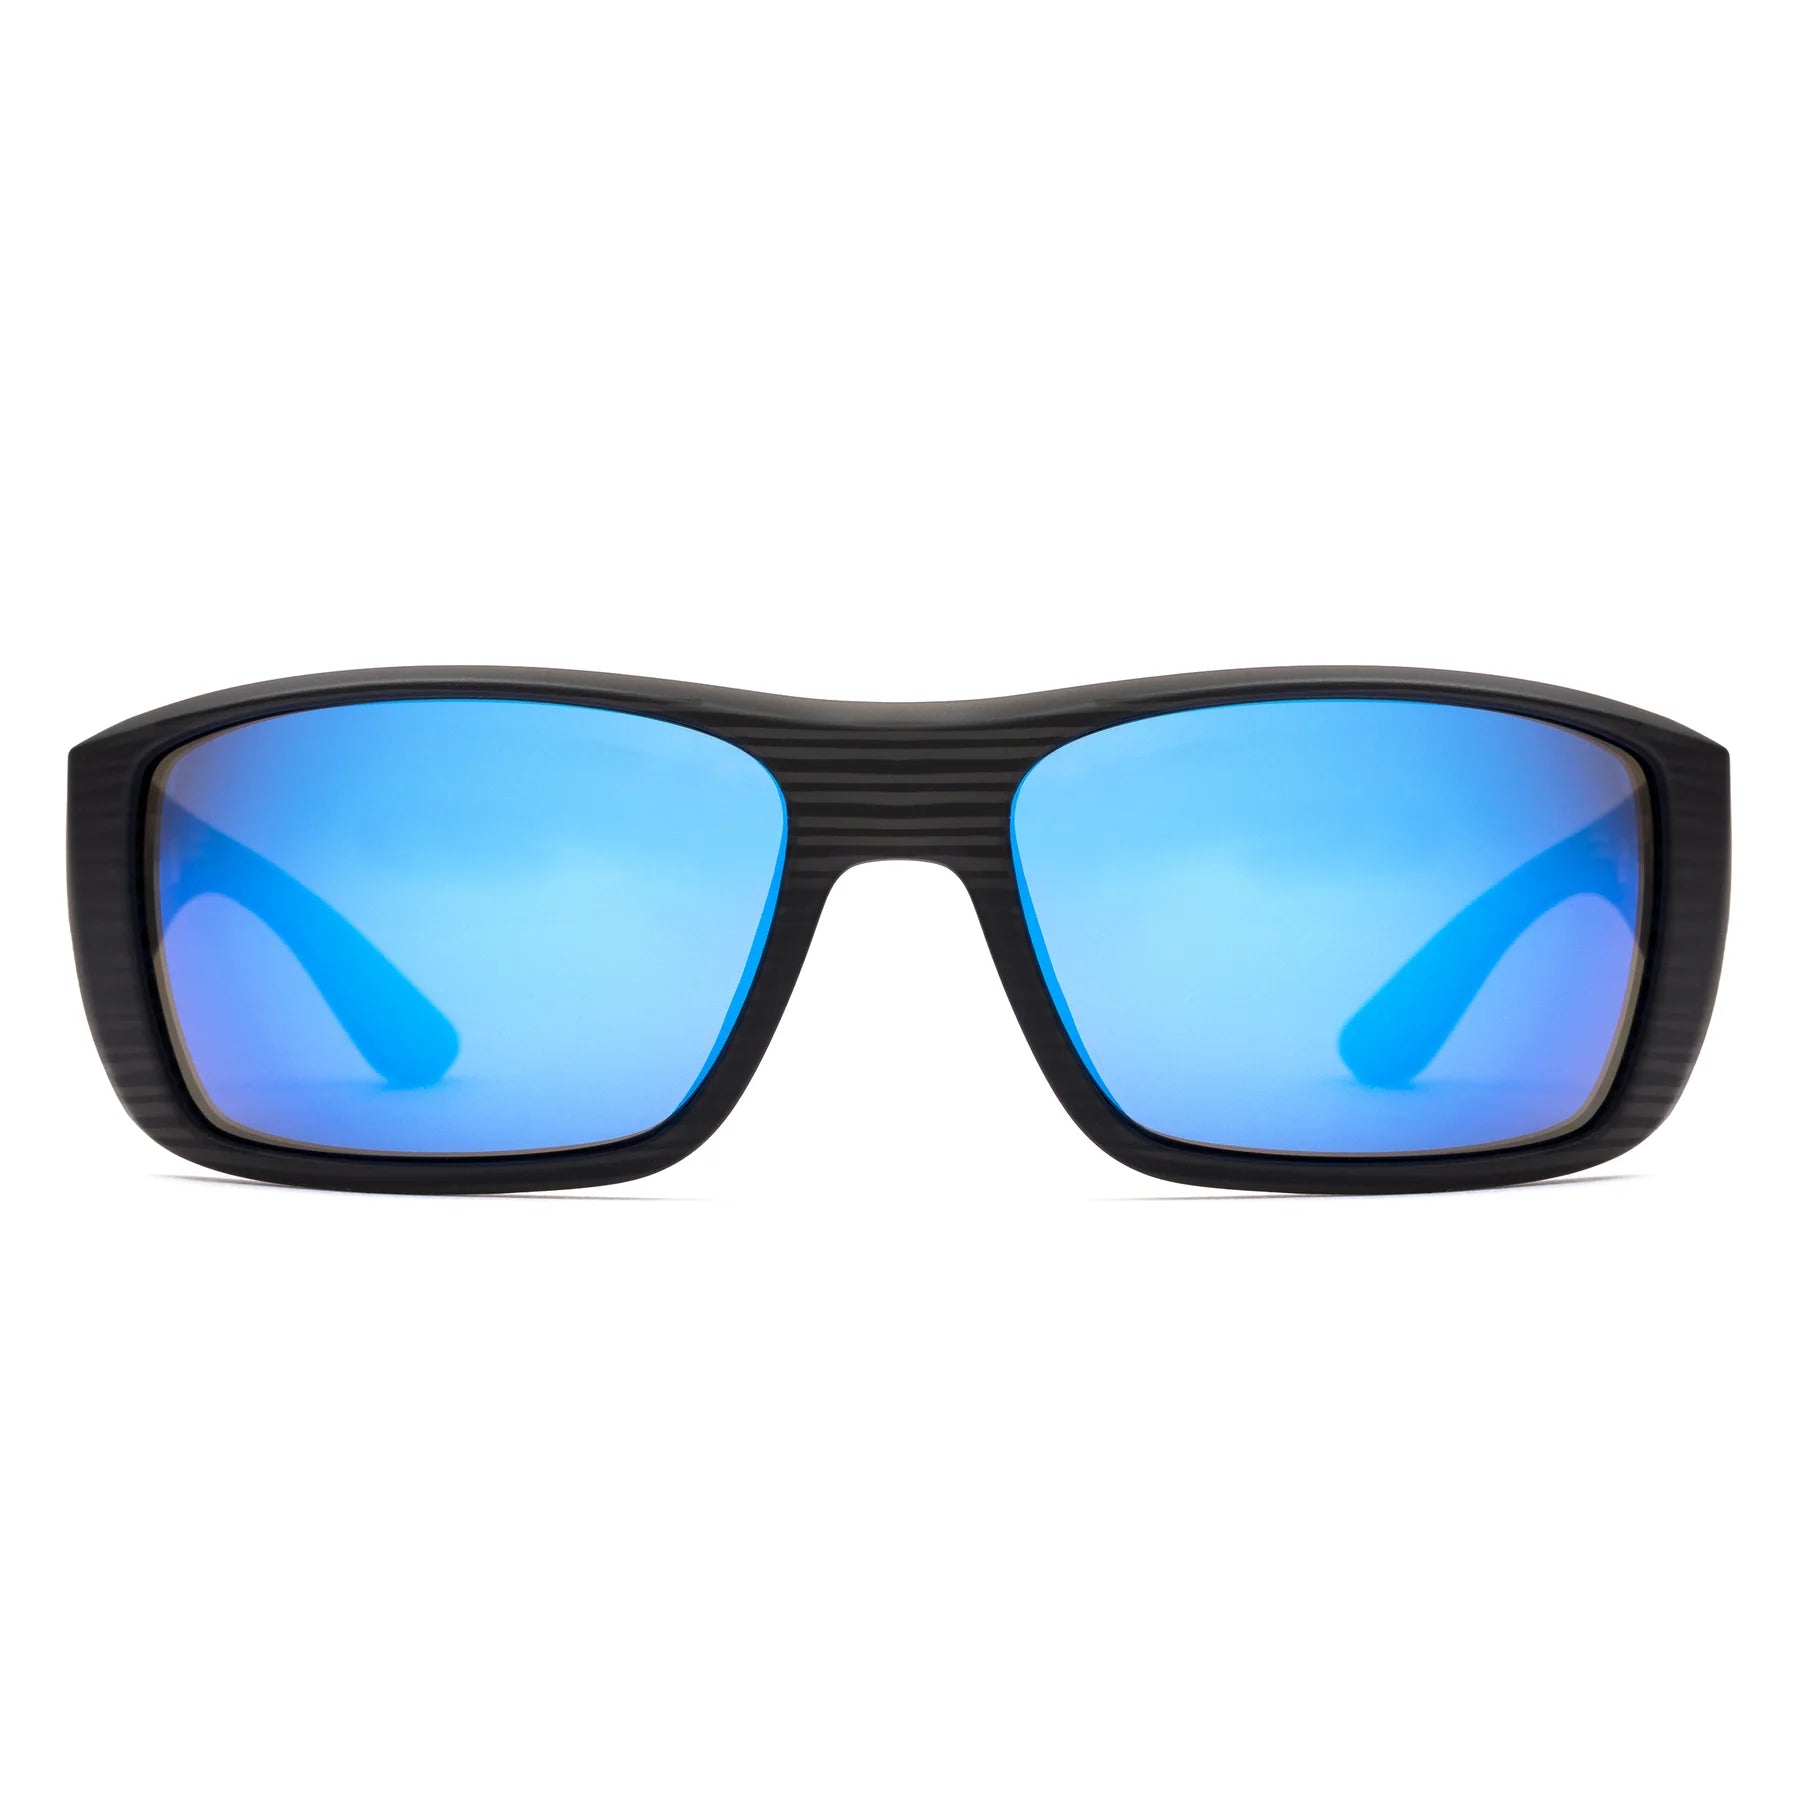 Otis Coastin Slim Polarized Sunglasses - Black Woodland L.I.T. Blue Mirror Sunglasses